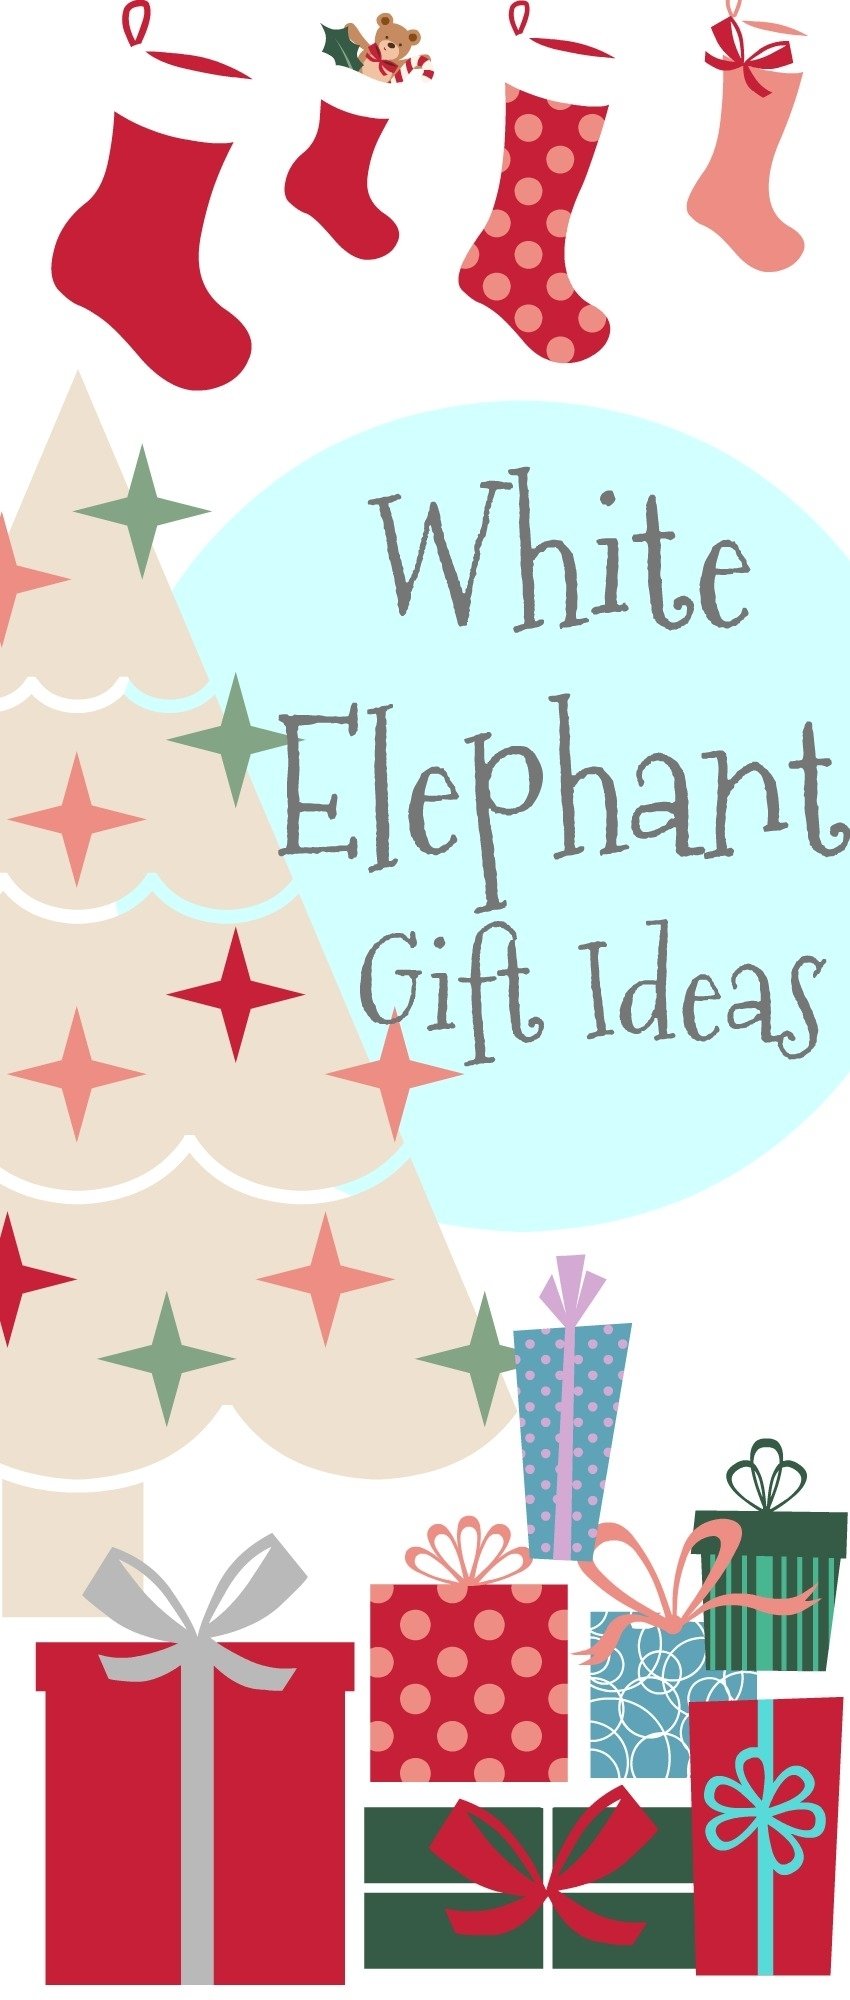 10 Famous Christmas White Elephant Gift Ideas white elephant gift ideas the cards we drew 1 2022